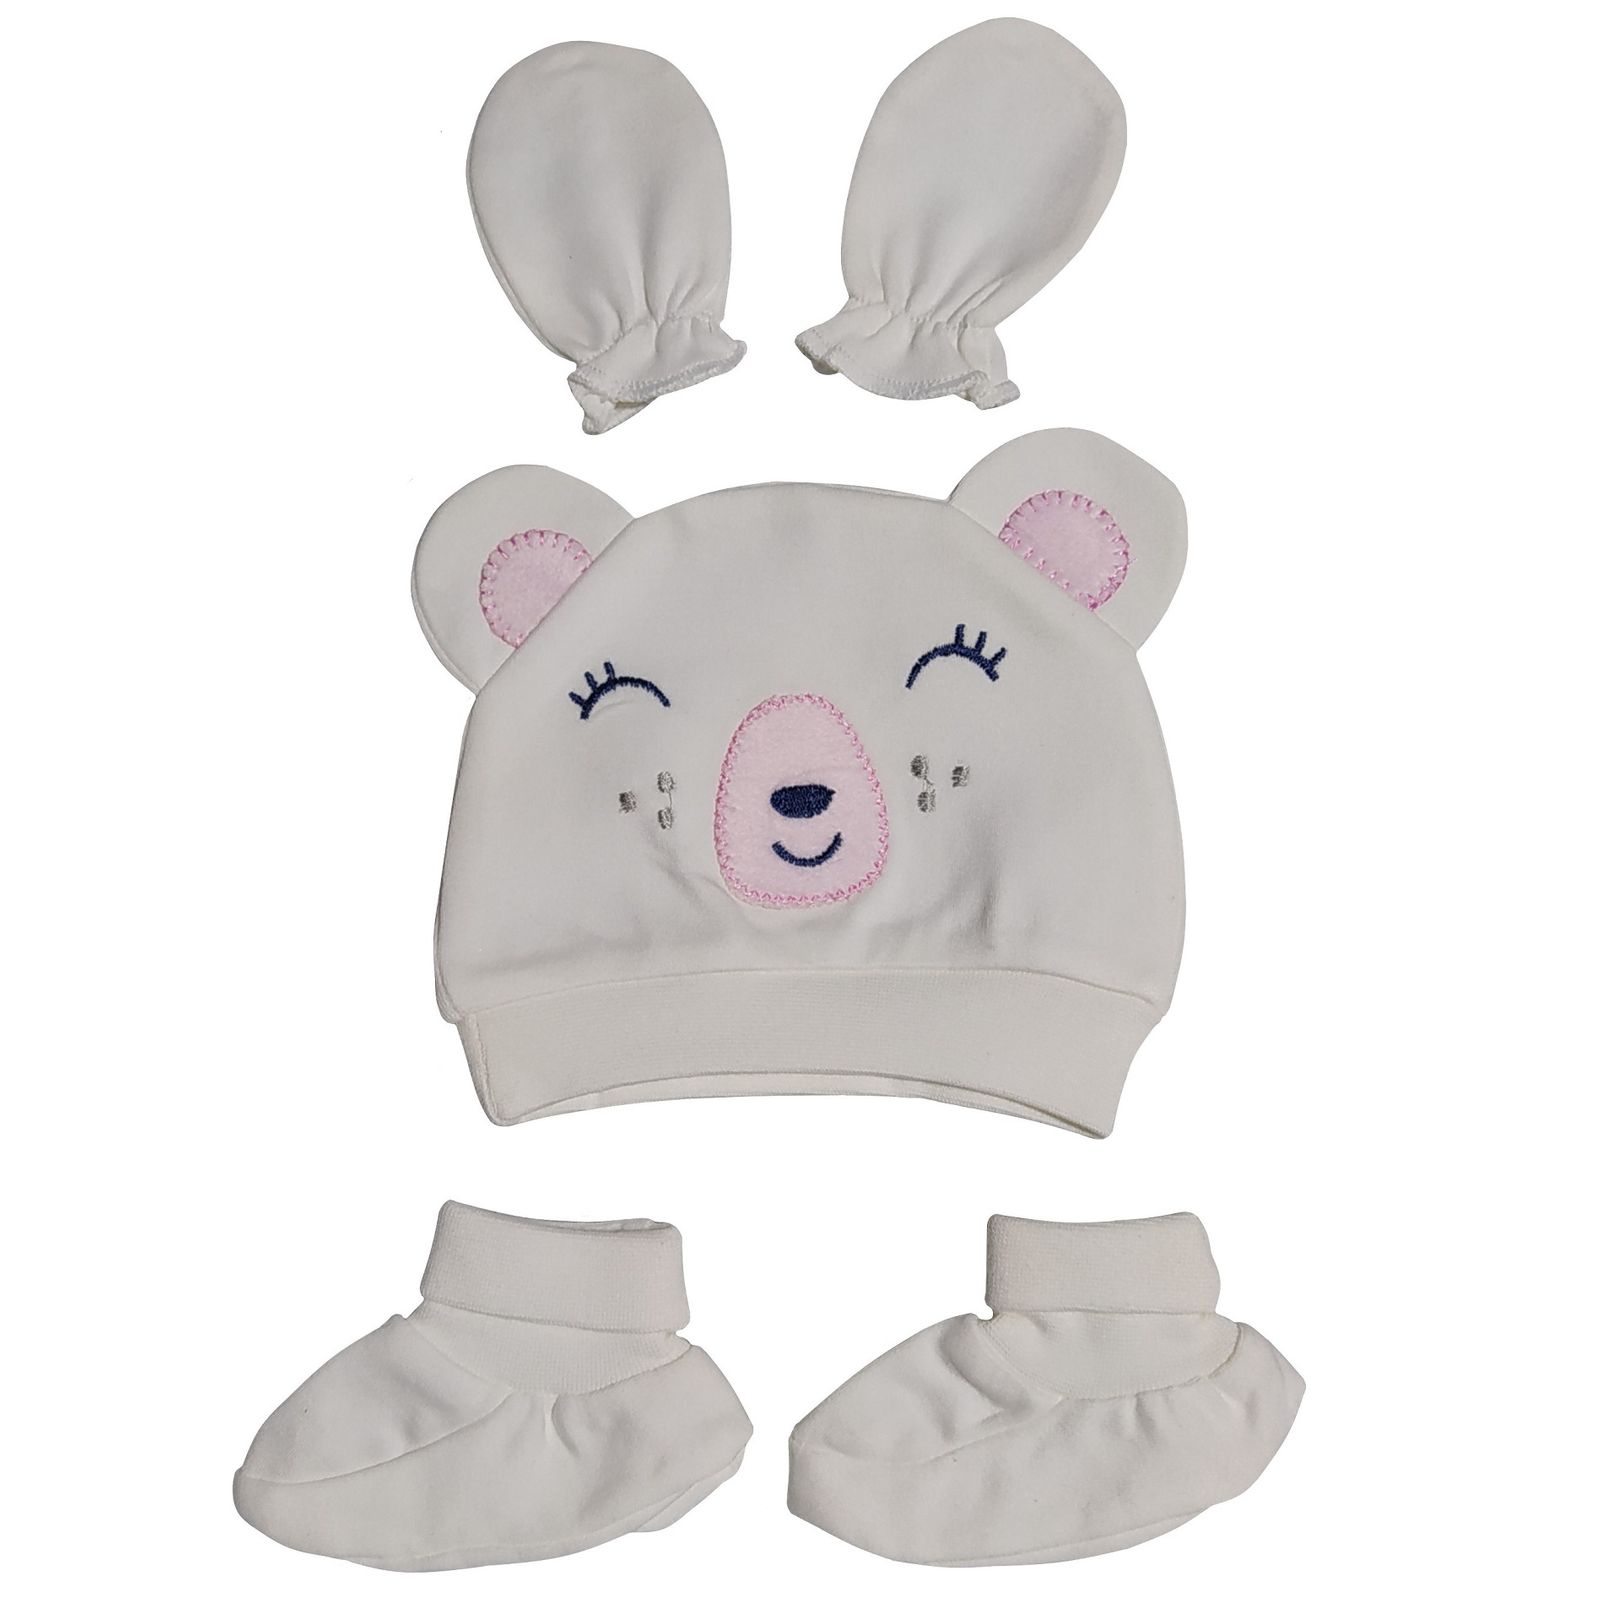 ست کلاه و پاپوش و دستکش نوزادی ماماس اند پاپاس مدل Sweety Bear-2 -  - 1